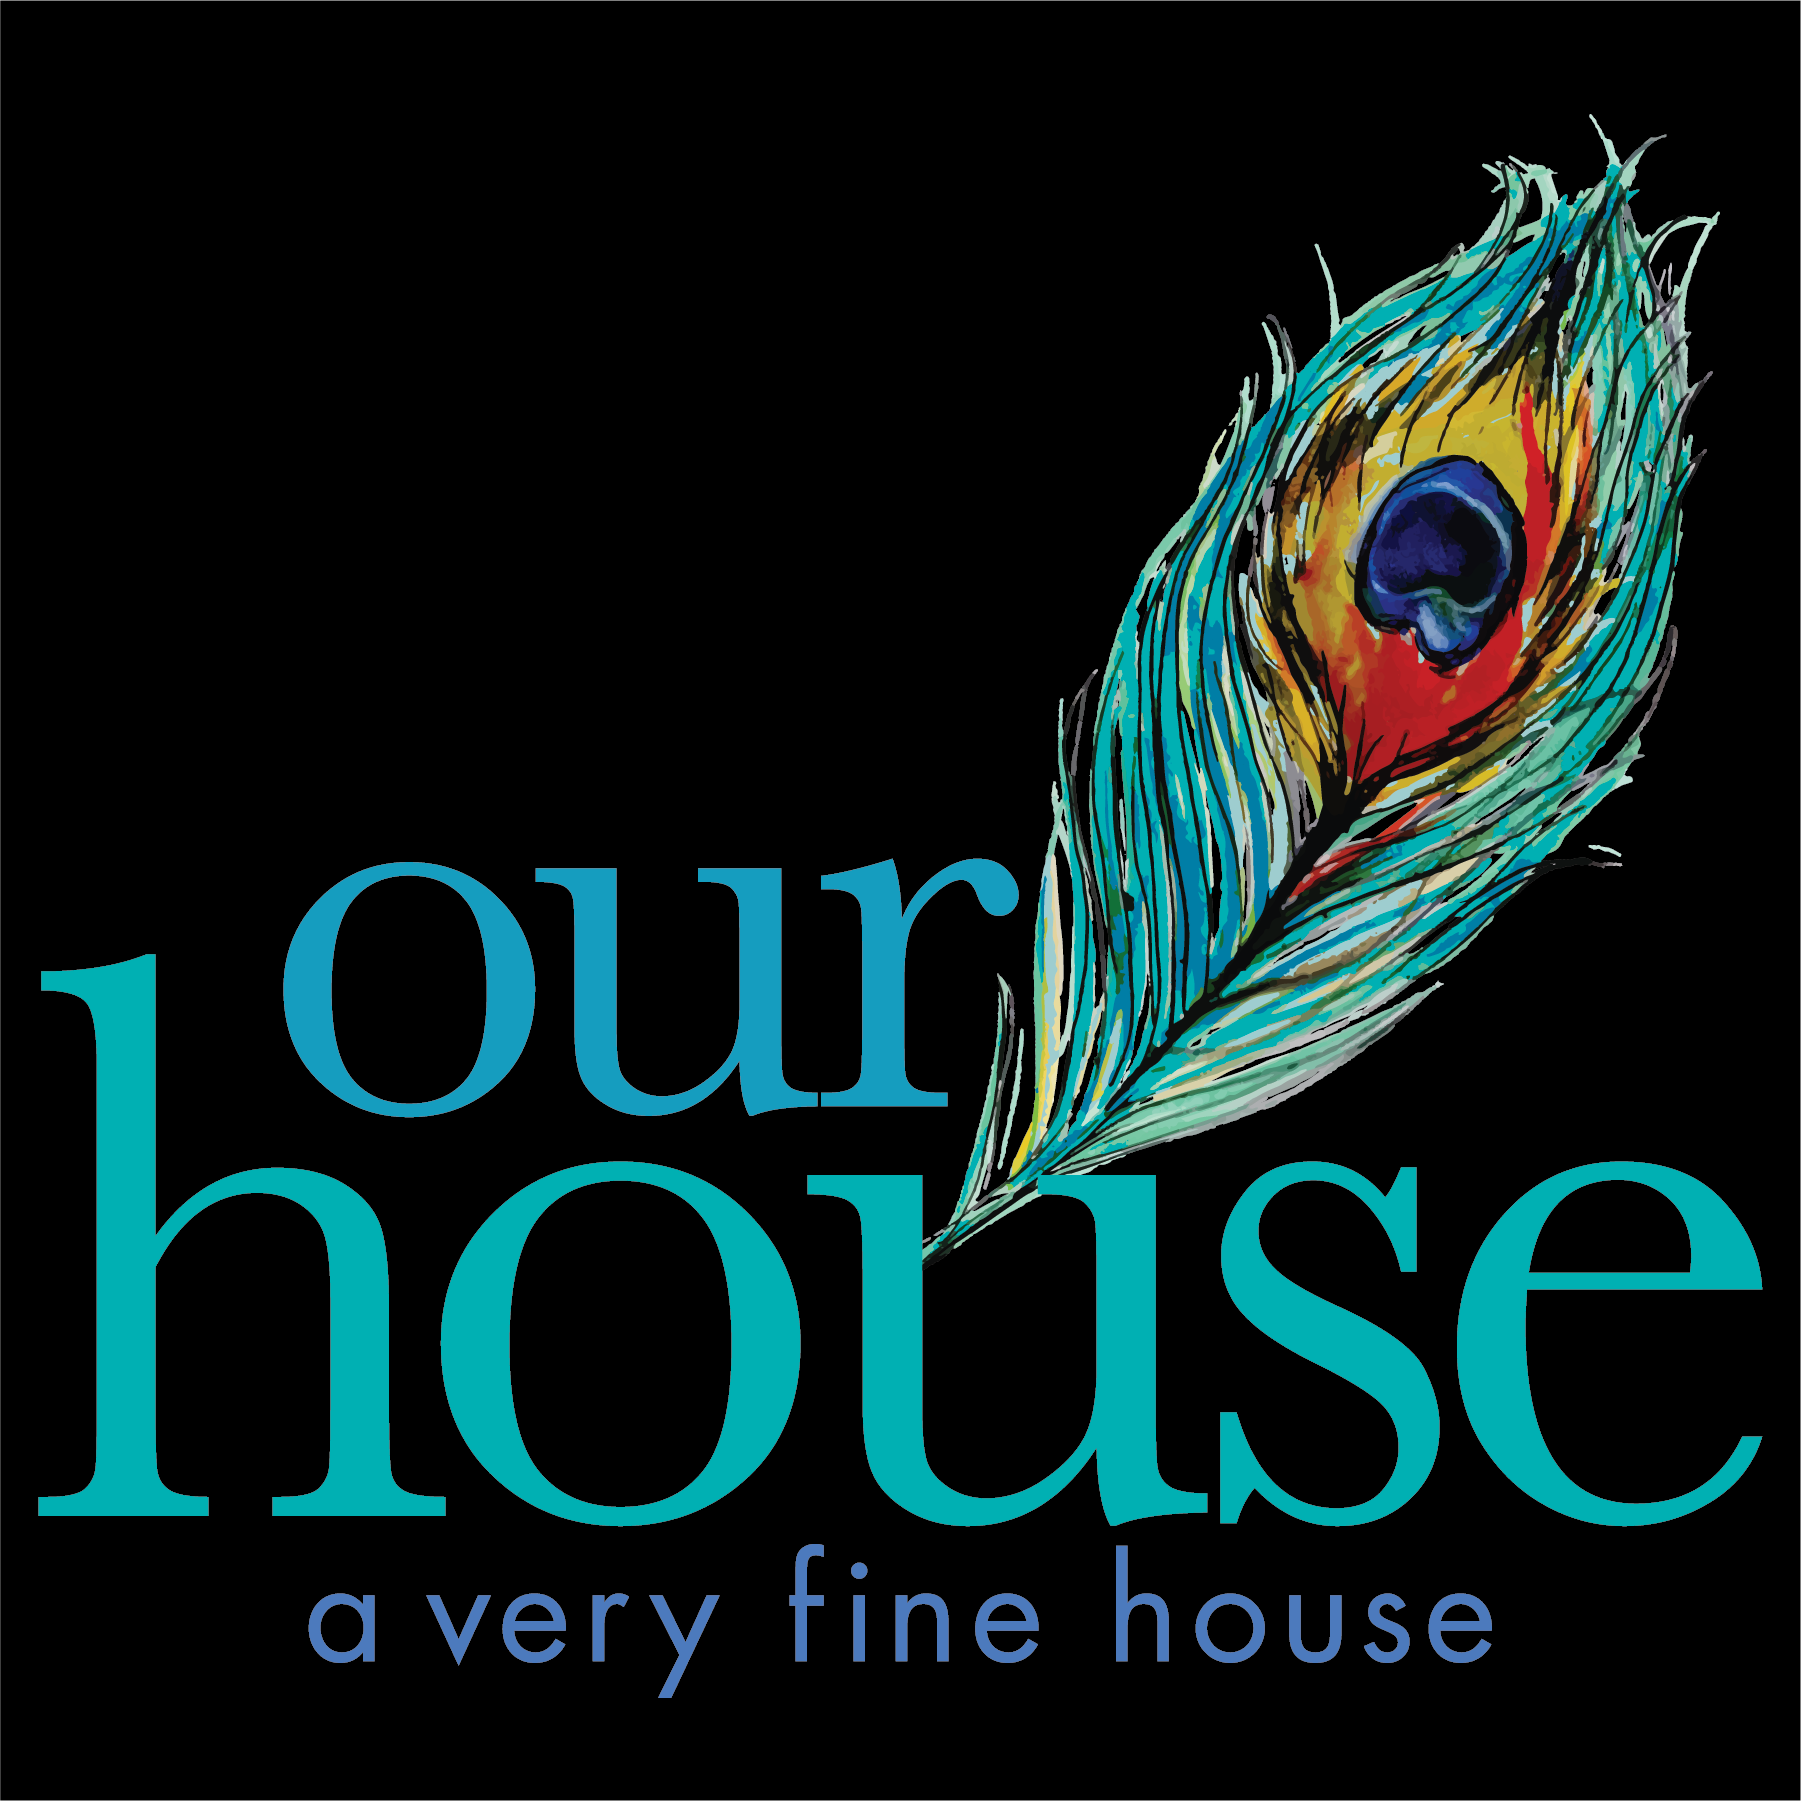 Our House Logo